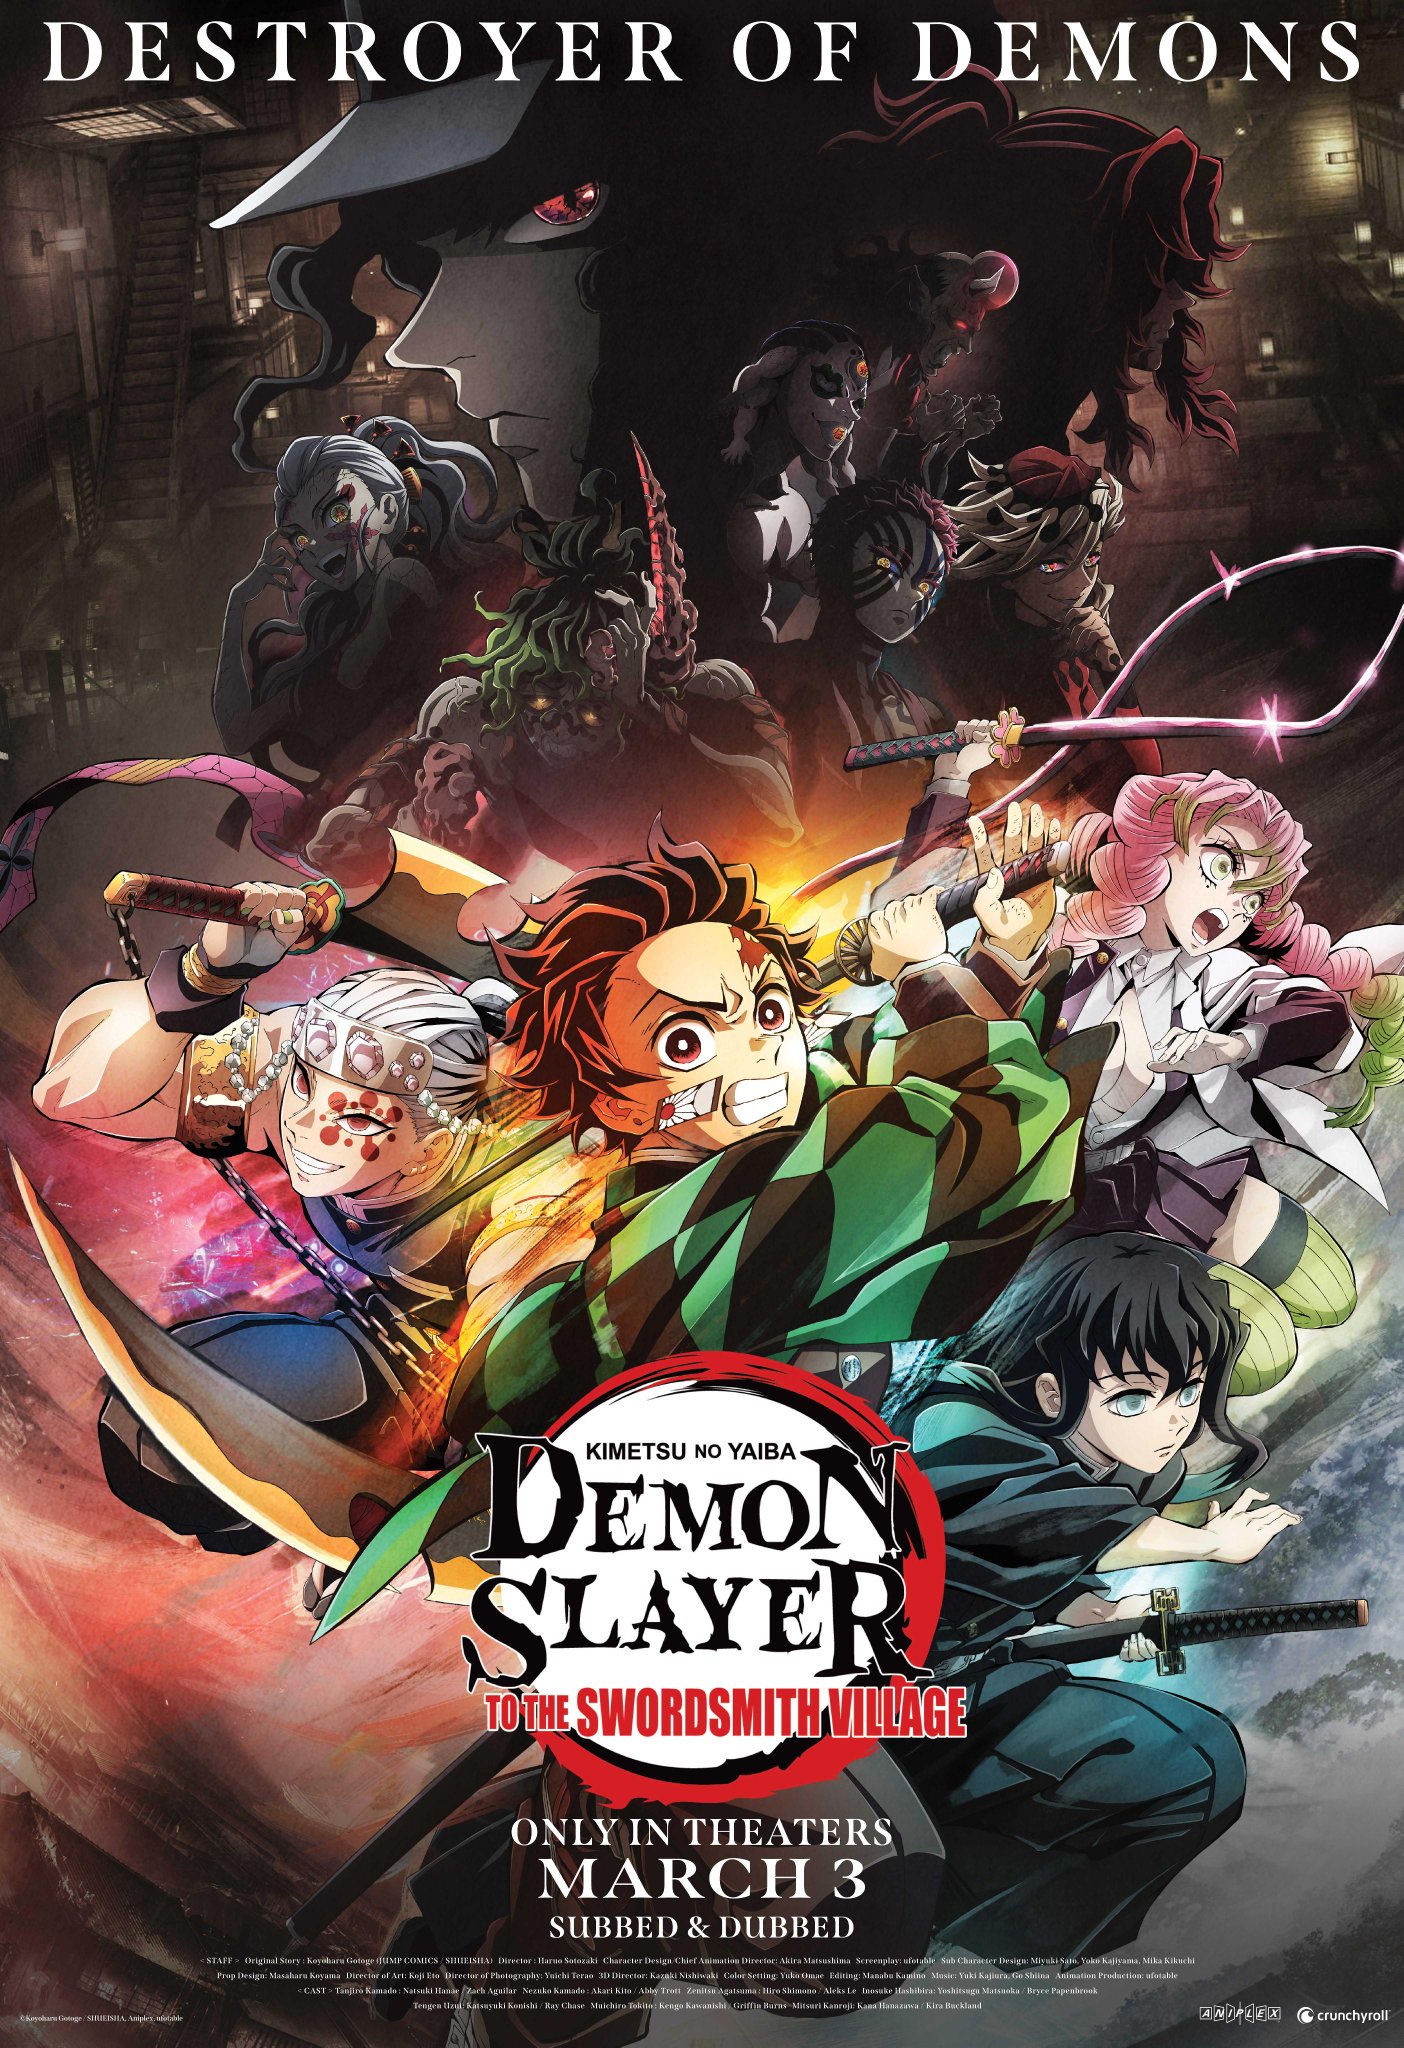 Crunchyroll.pt - Anime de Demon Slayer: Kimetsu no Yaiba